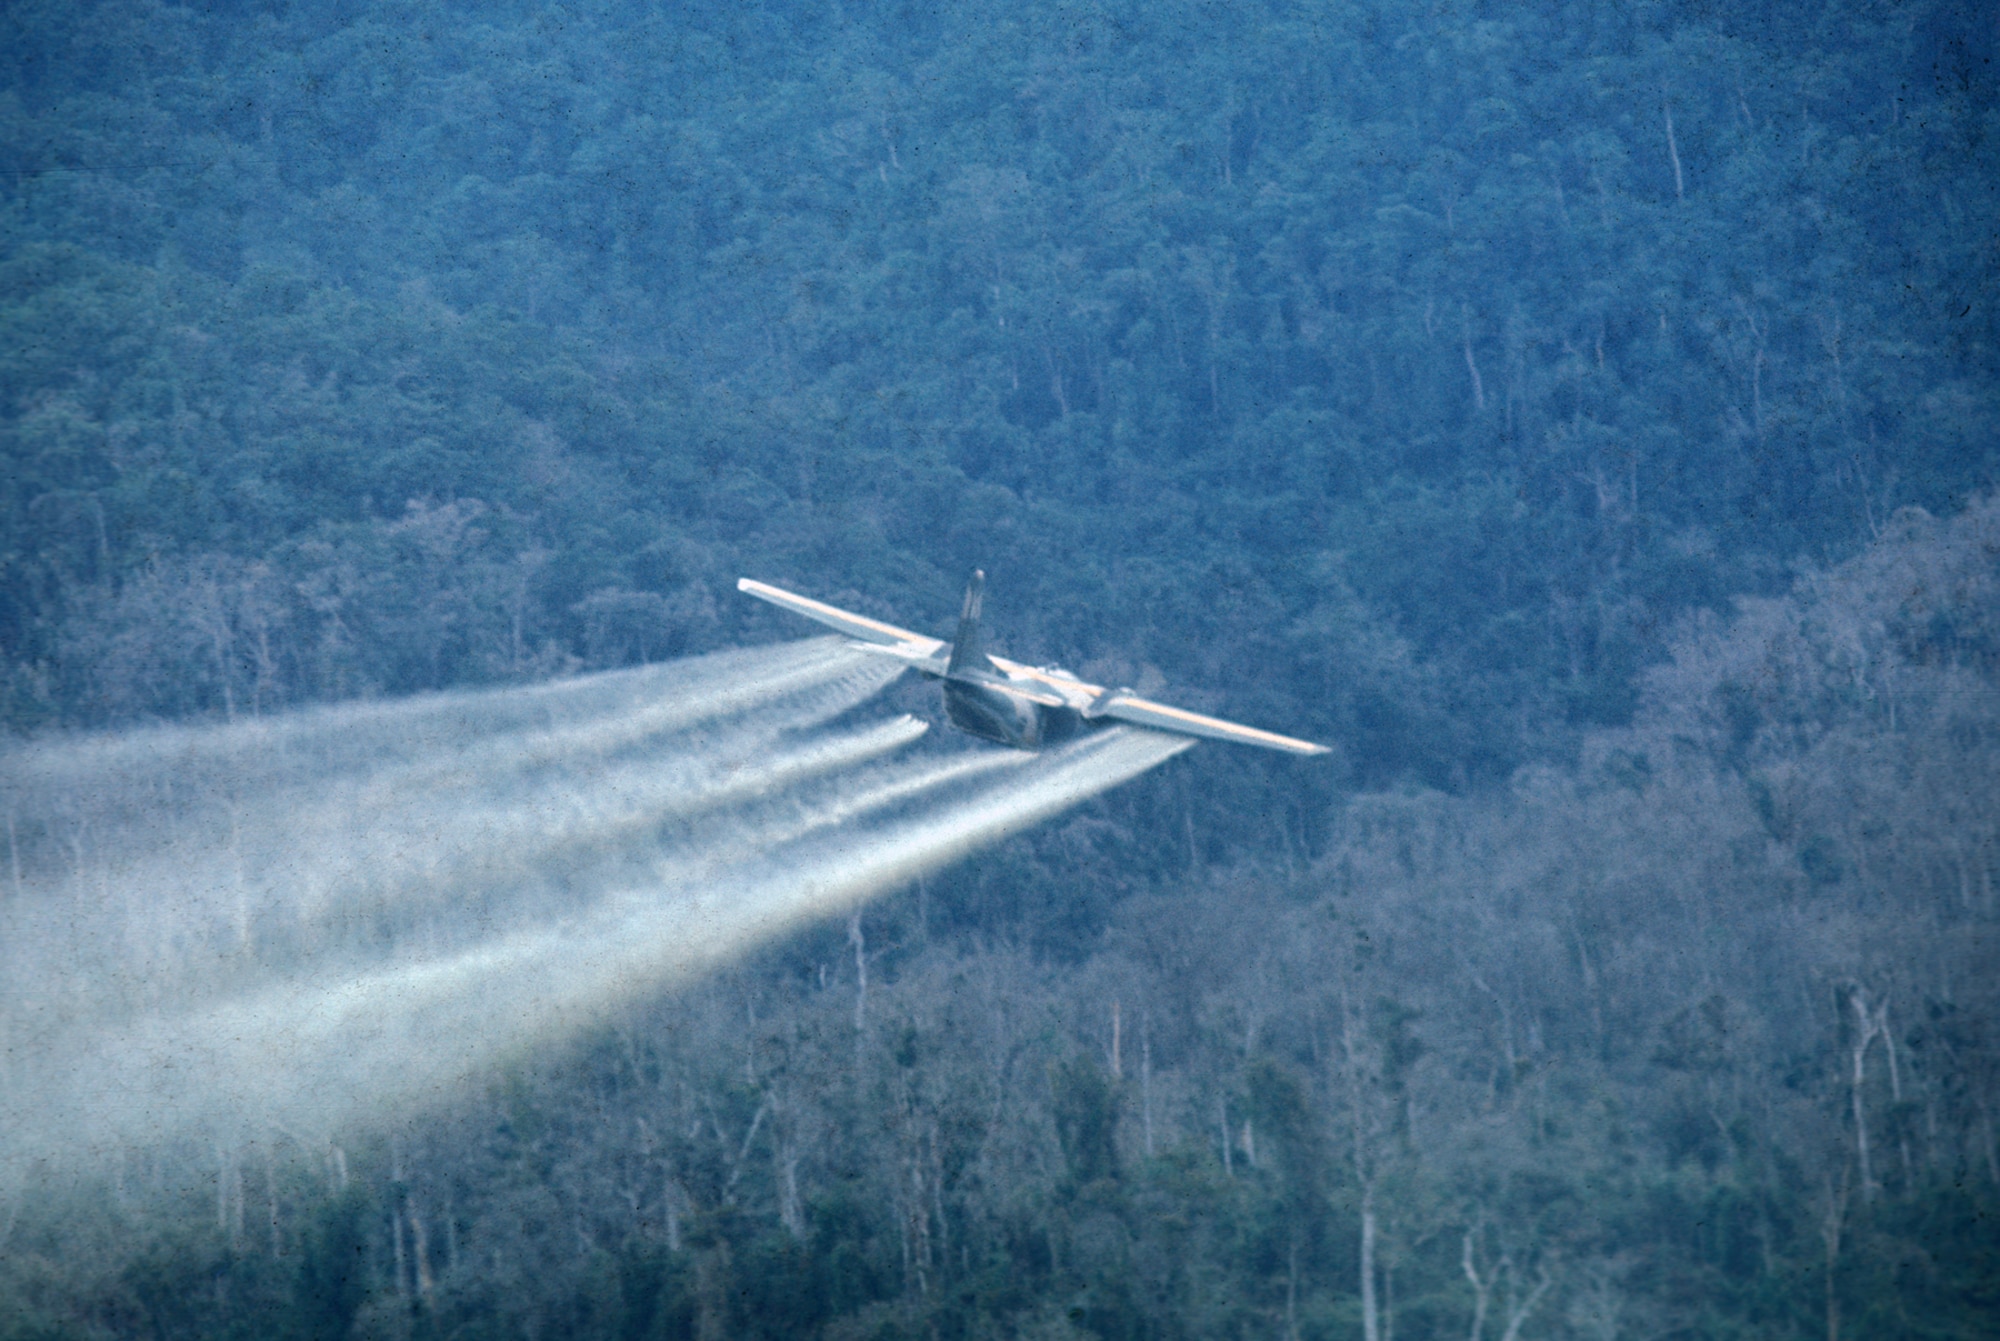 U.S. Air Force aircraft spraying defoliant. (U.S. Air Force photo).